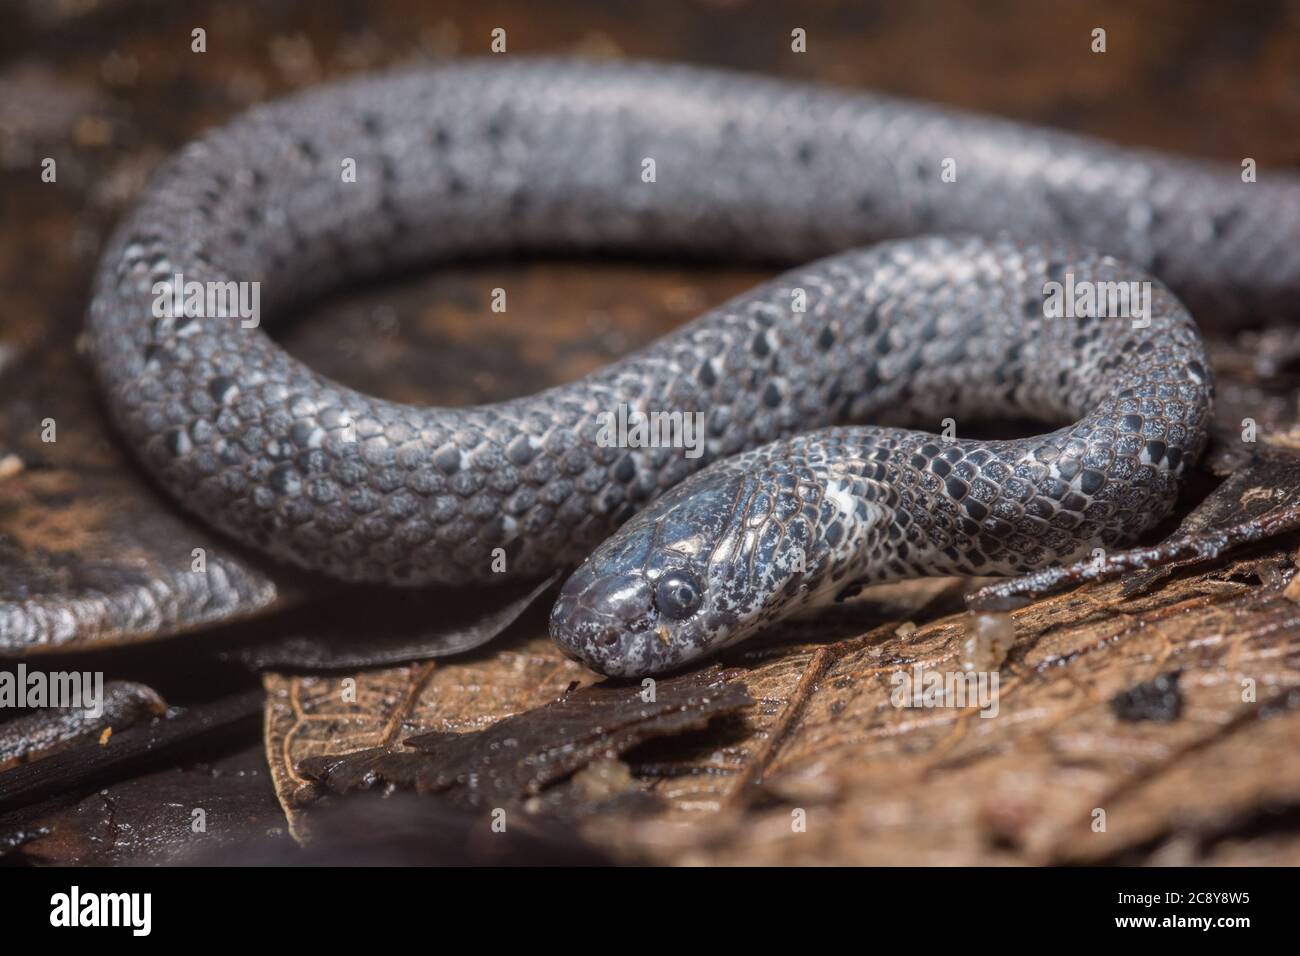 A white spotted slug snake (Pareas margaritophorus) a common harmless snake from Hong Kong. Stock Photo